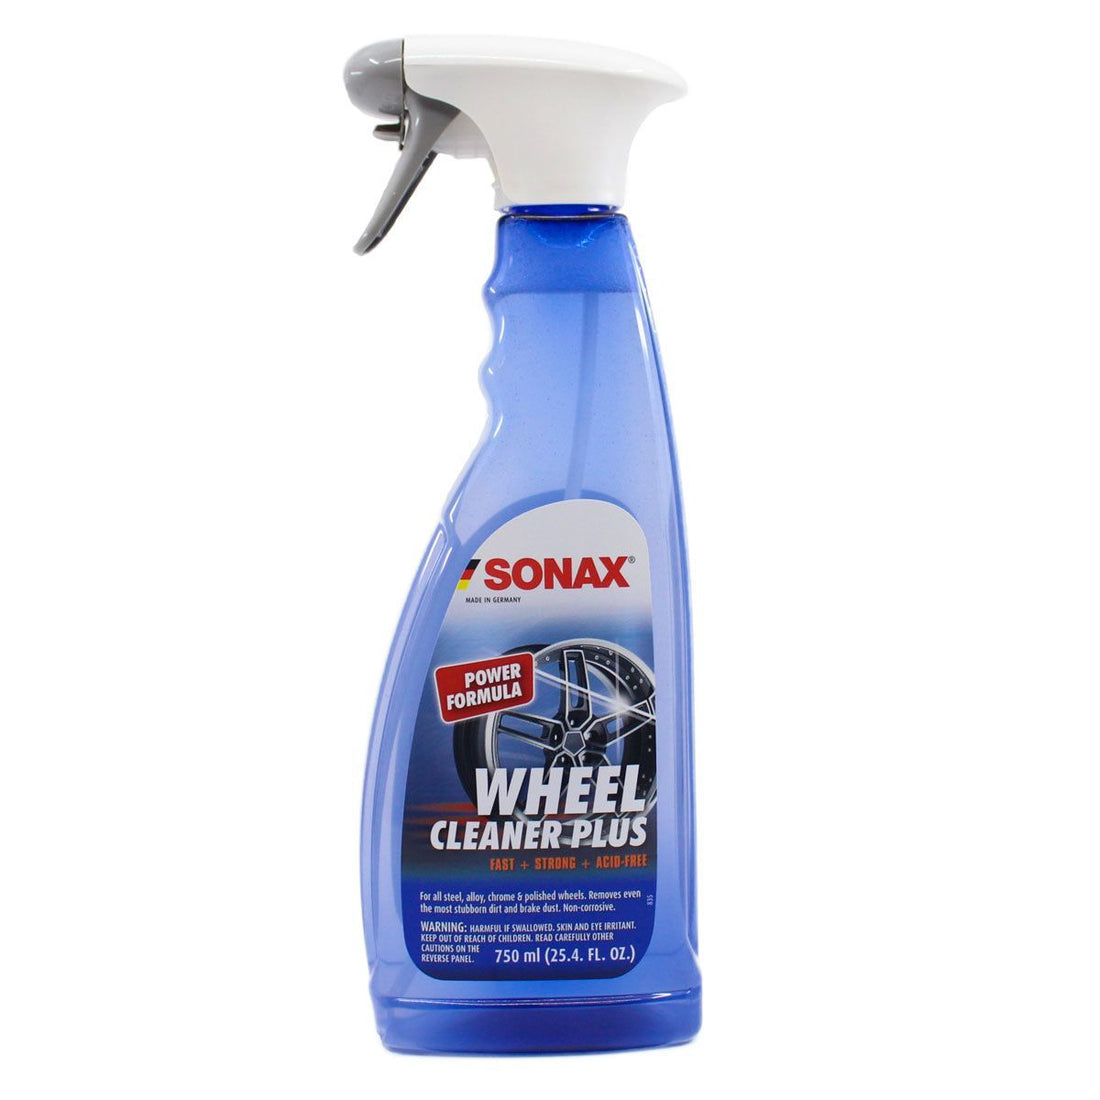 Spray de silicona Sonax, 400 ml - SO348300 - Pro Detailing